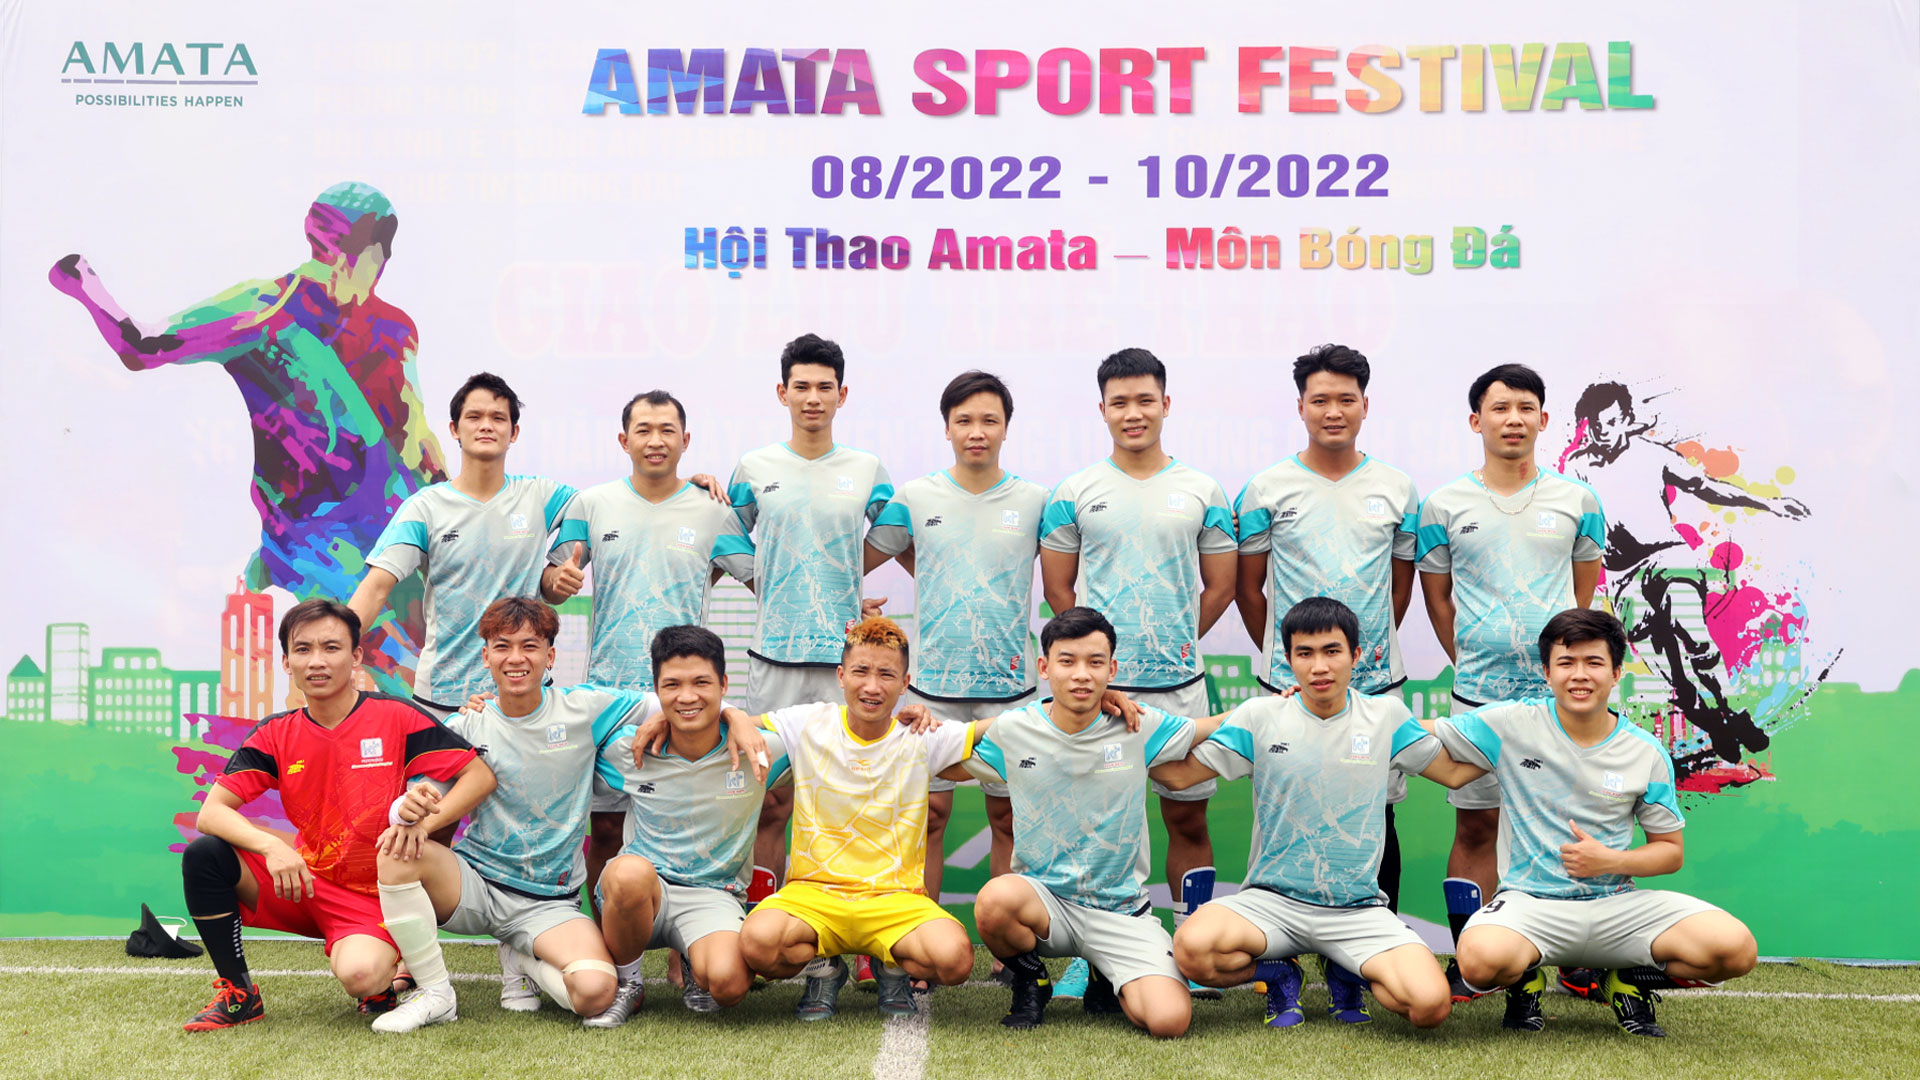 Amata Sport Festival 2022